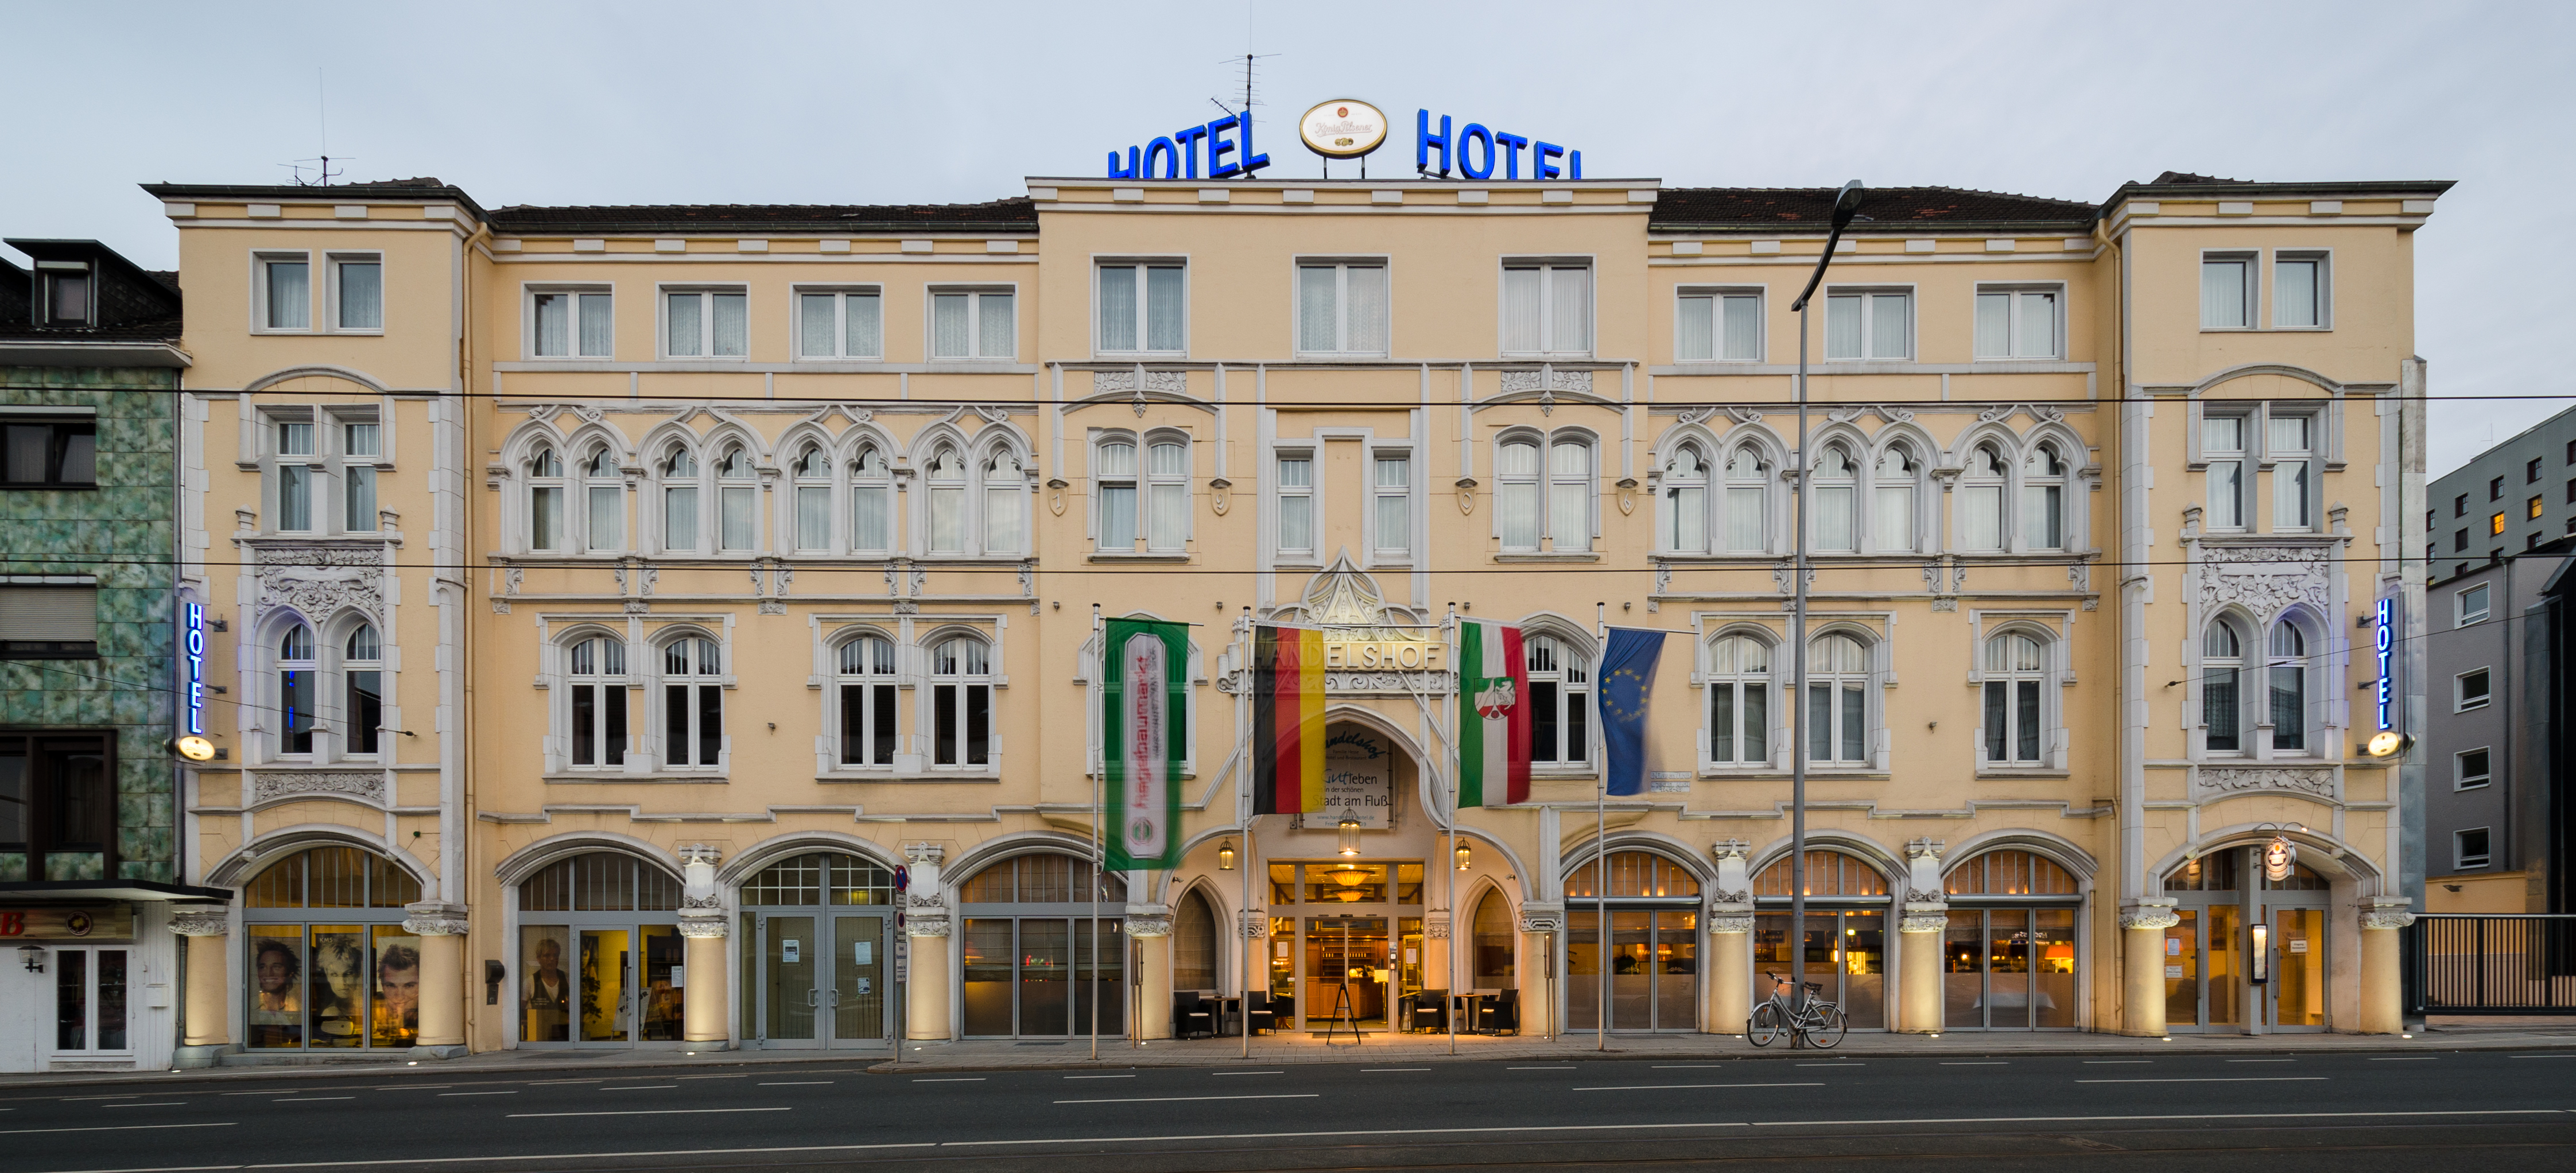 Hotel-Handelshof-Muelheim-Abends-2013